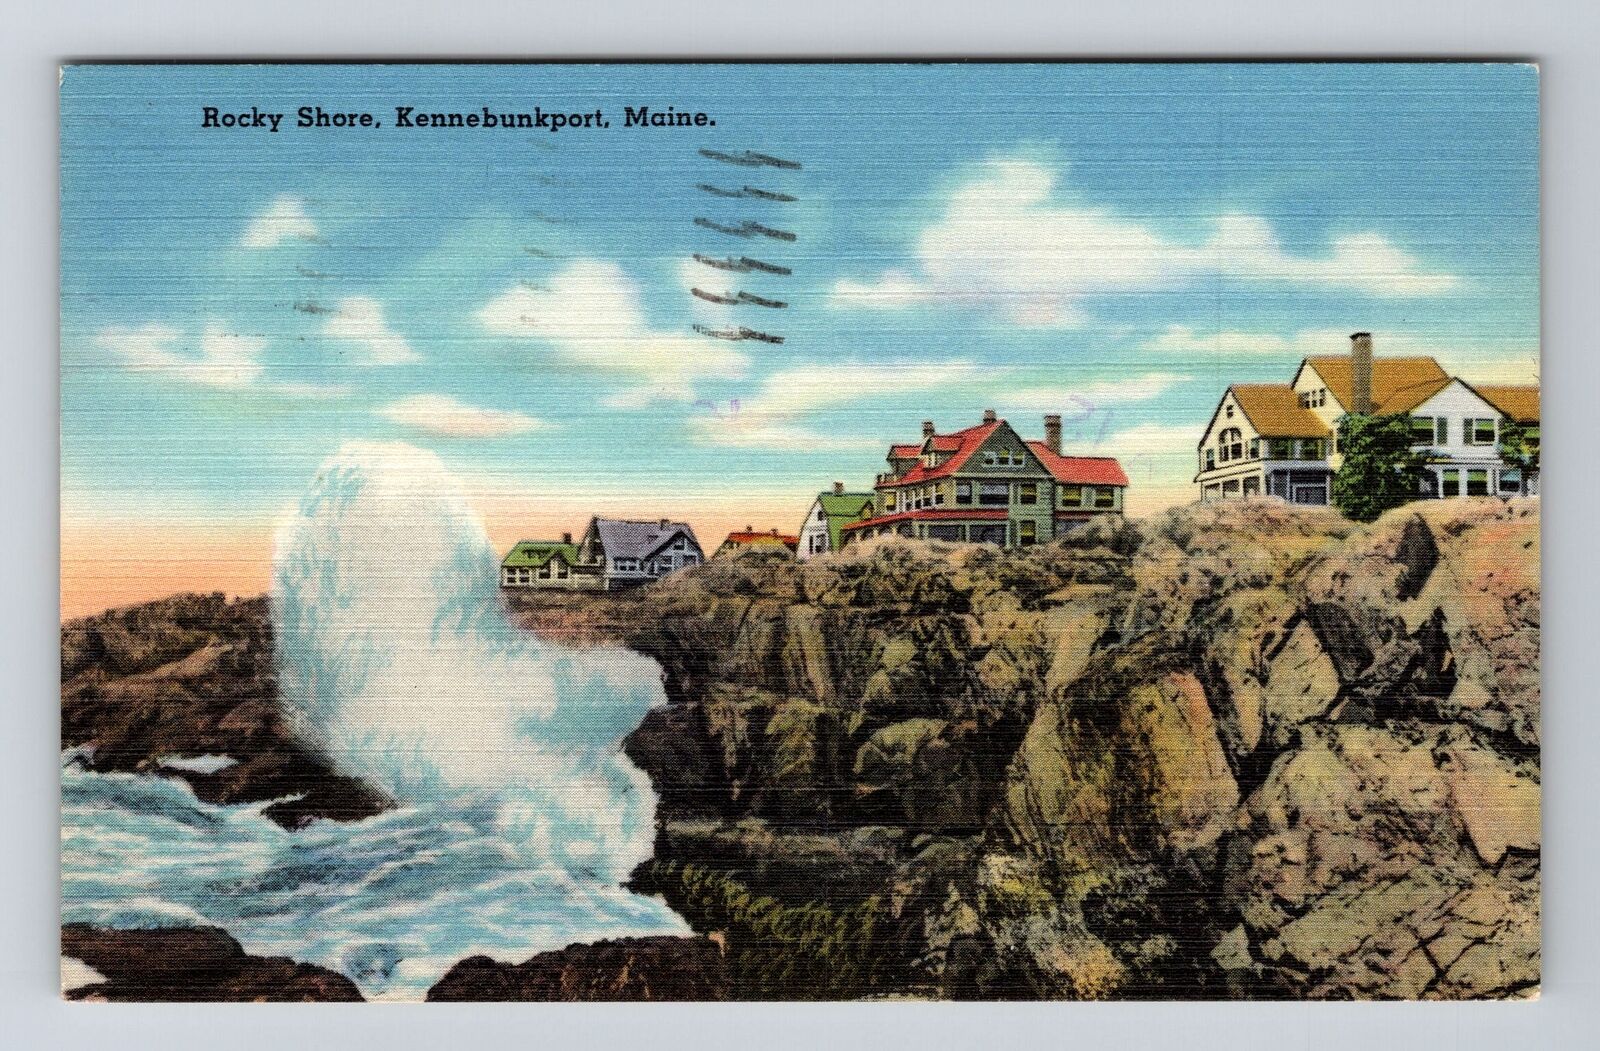 Kennebunkport ME-Maine, Rocky Shore, c1973 Vintage Postcard